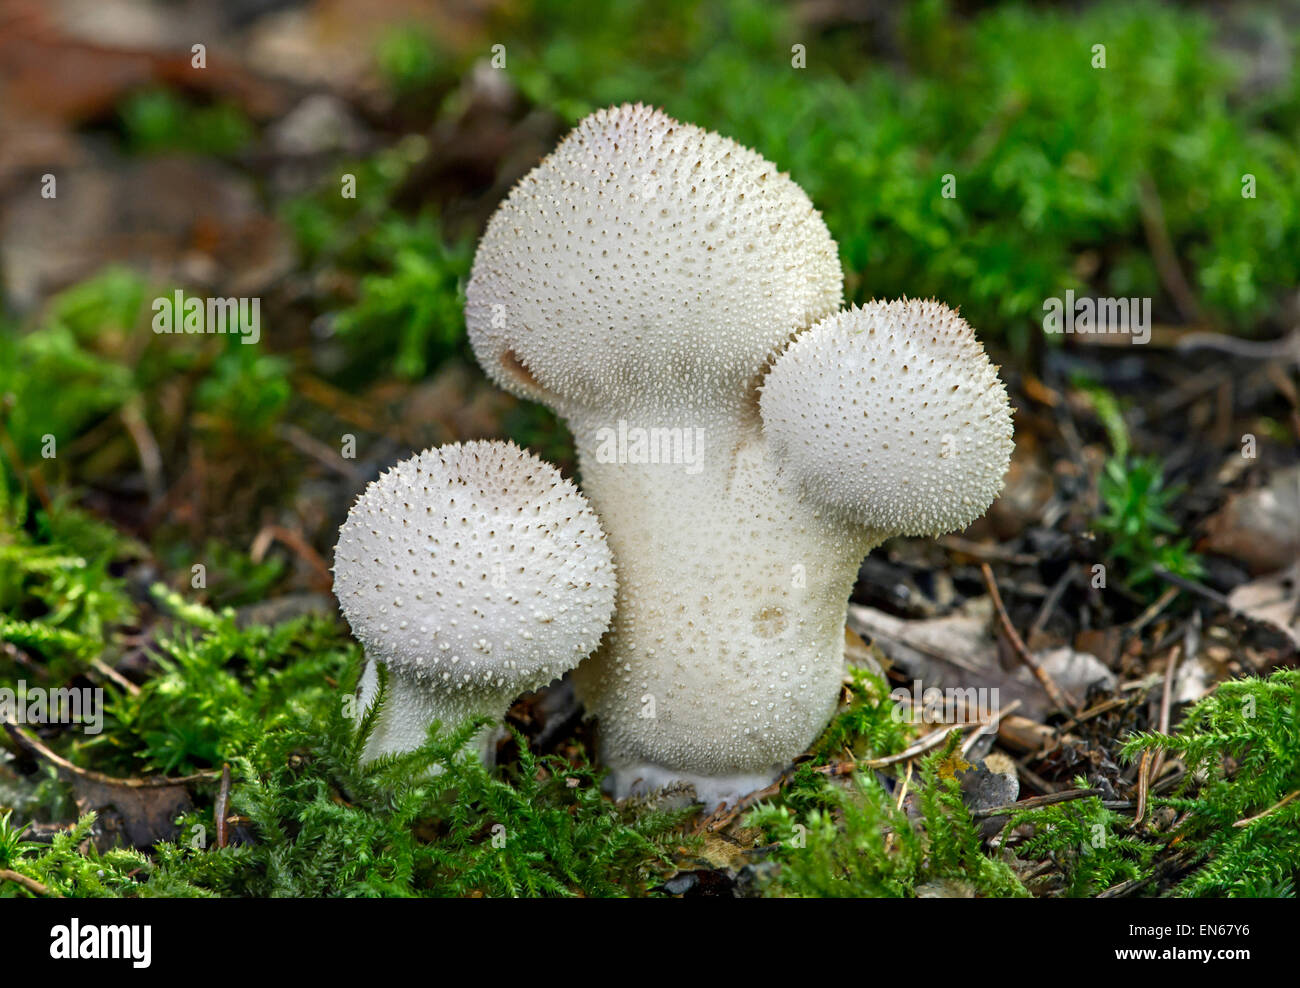 Gemeinsame puffball (lycoperdon perlatum) mit hellen, kurze kegelförmigen Stacheln, saprobic Pilze, Essbar, der Schweiz Stockfoto